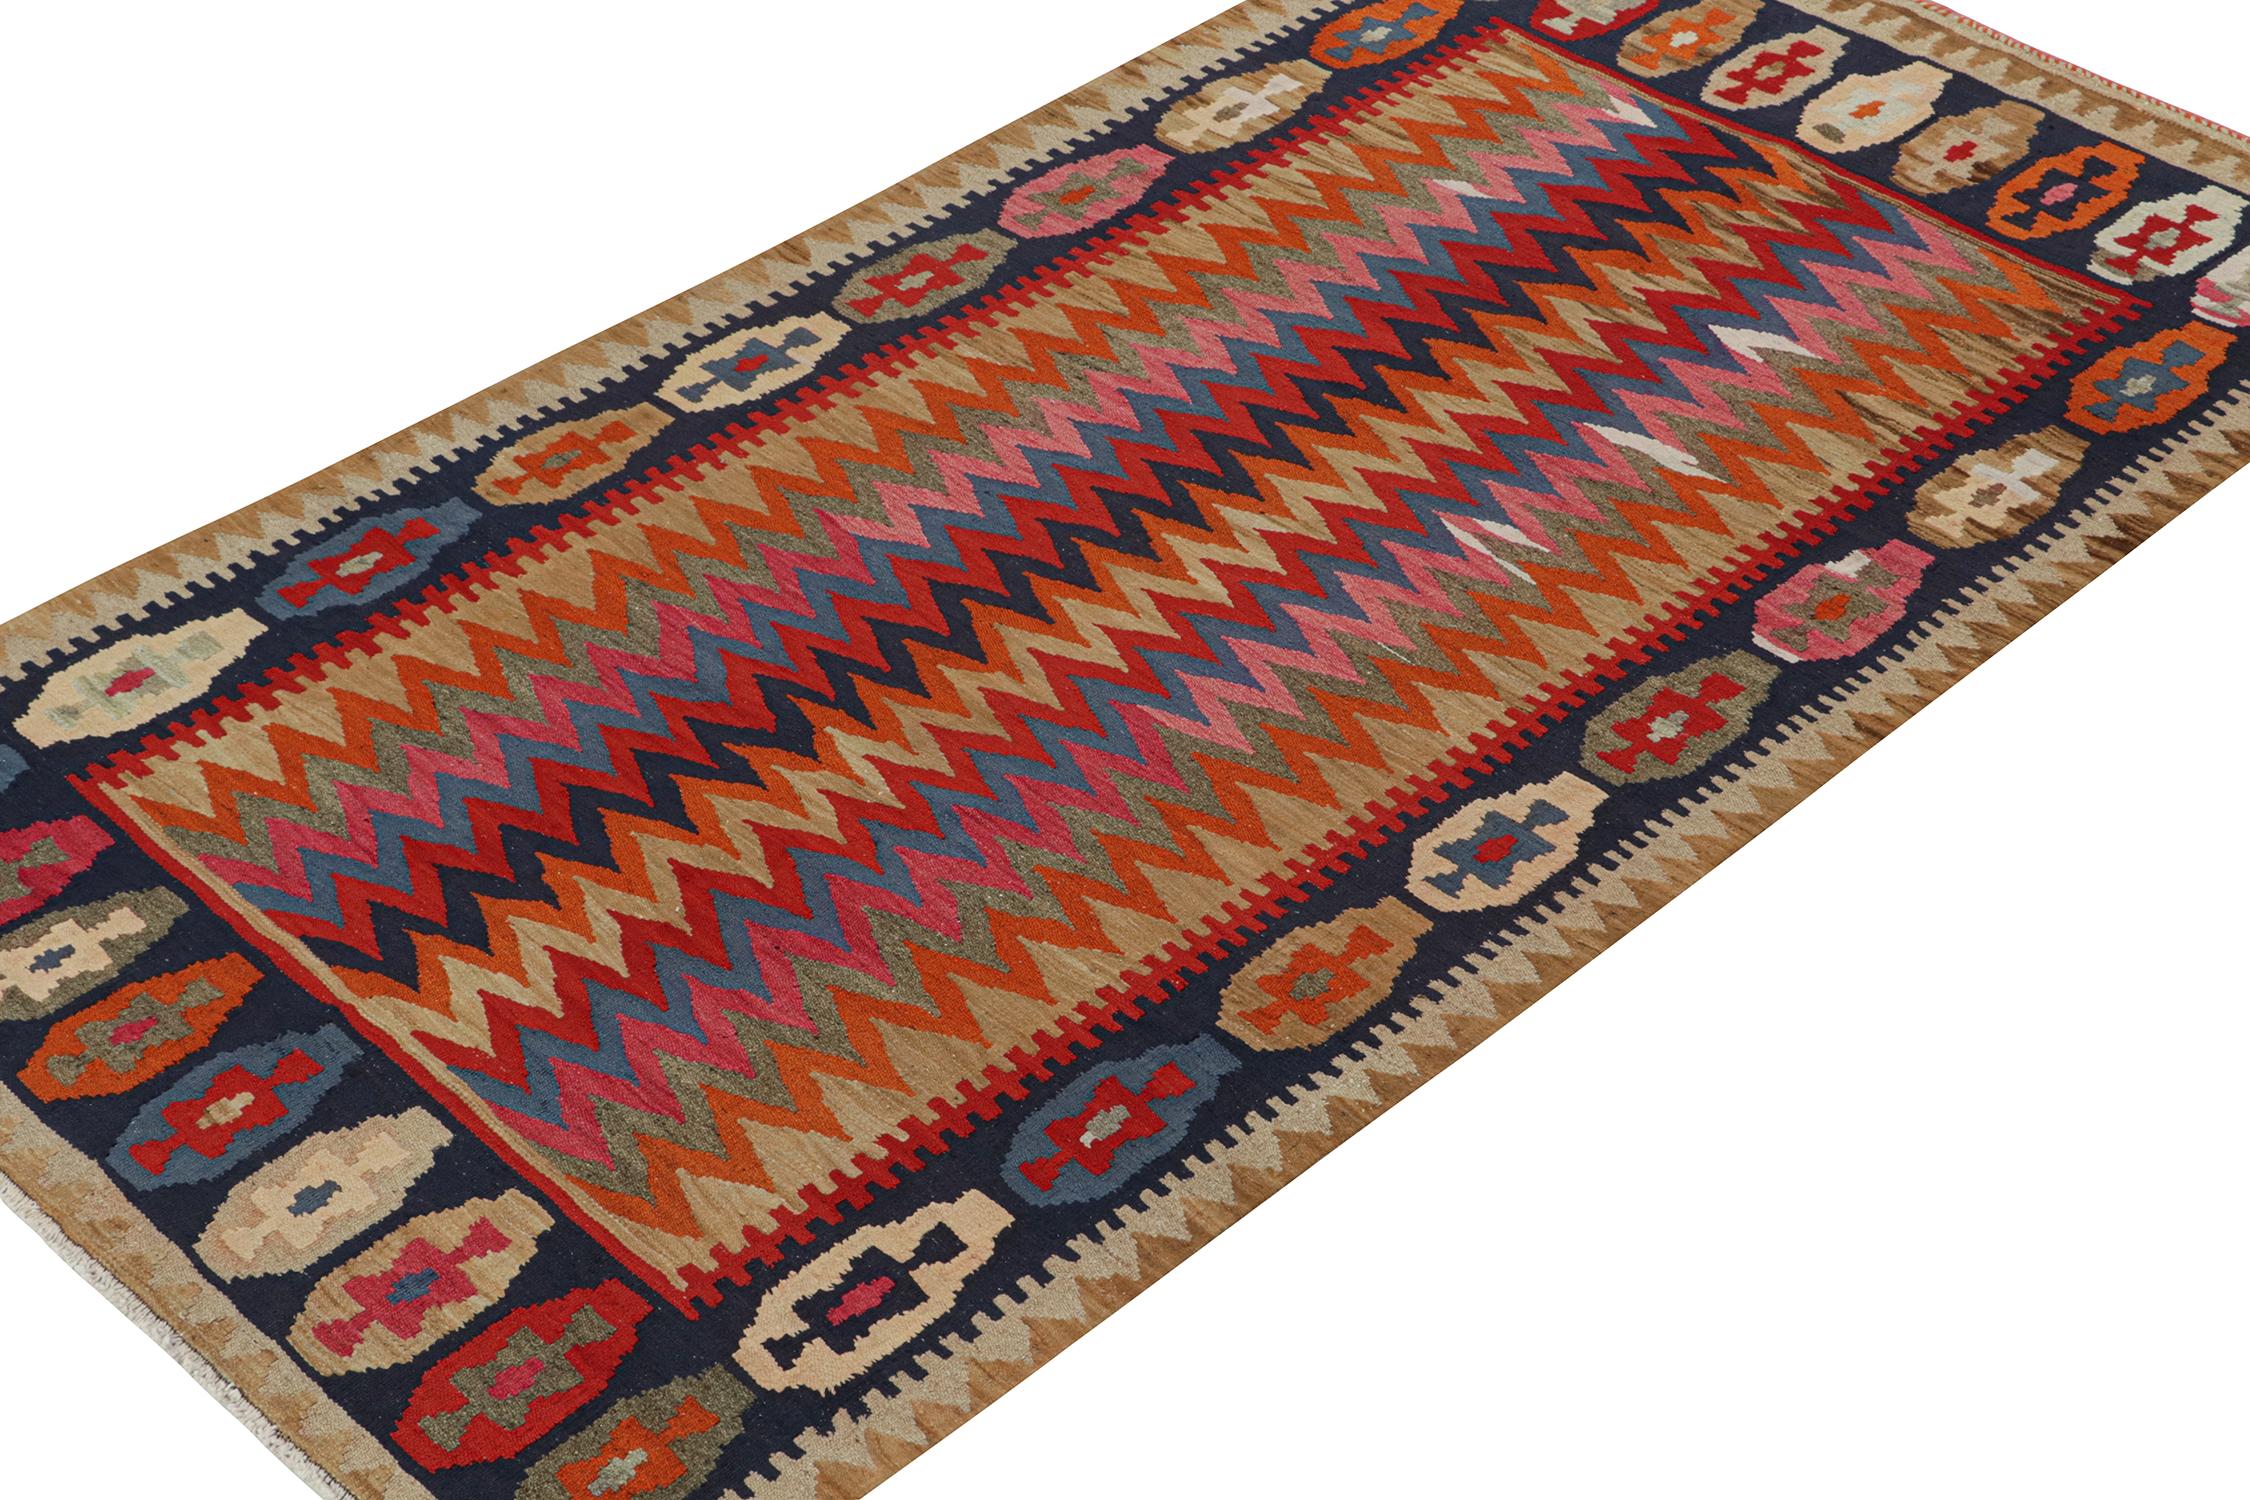 Tribal Vintage Shahsavan Persian Kilim with Vibrant Chevron Patterns by Rug & Kilim For Sale